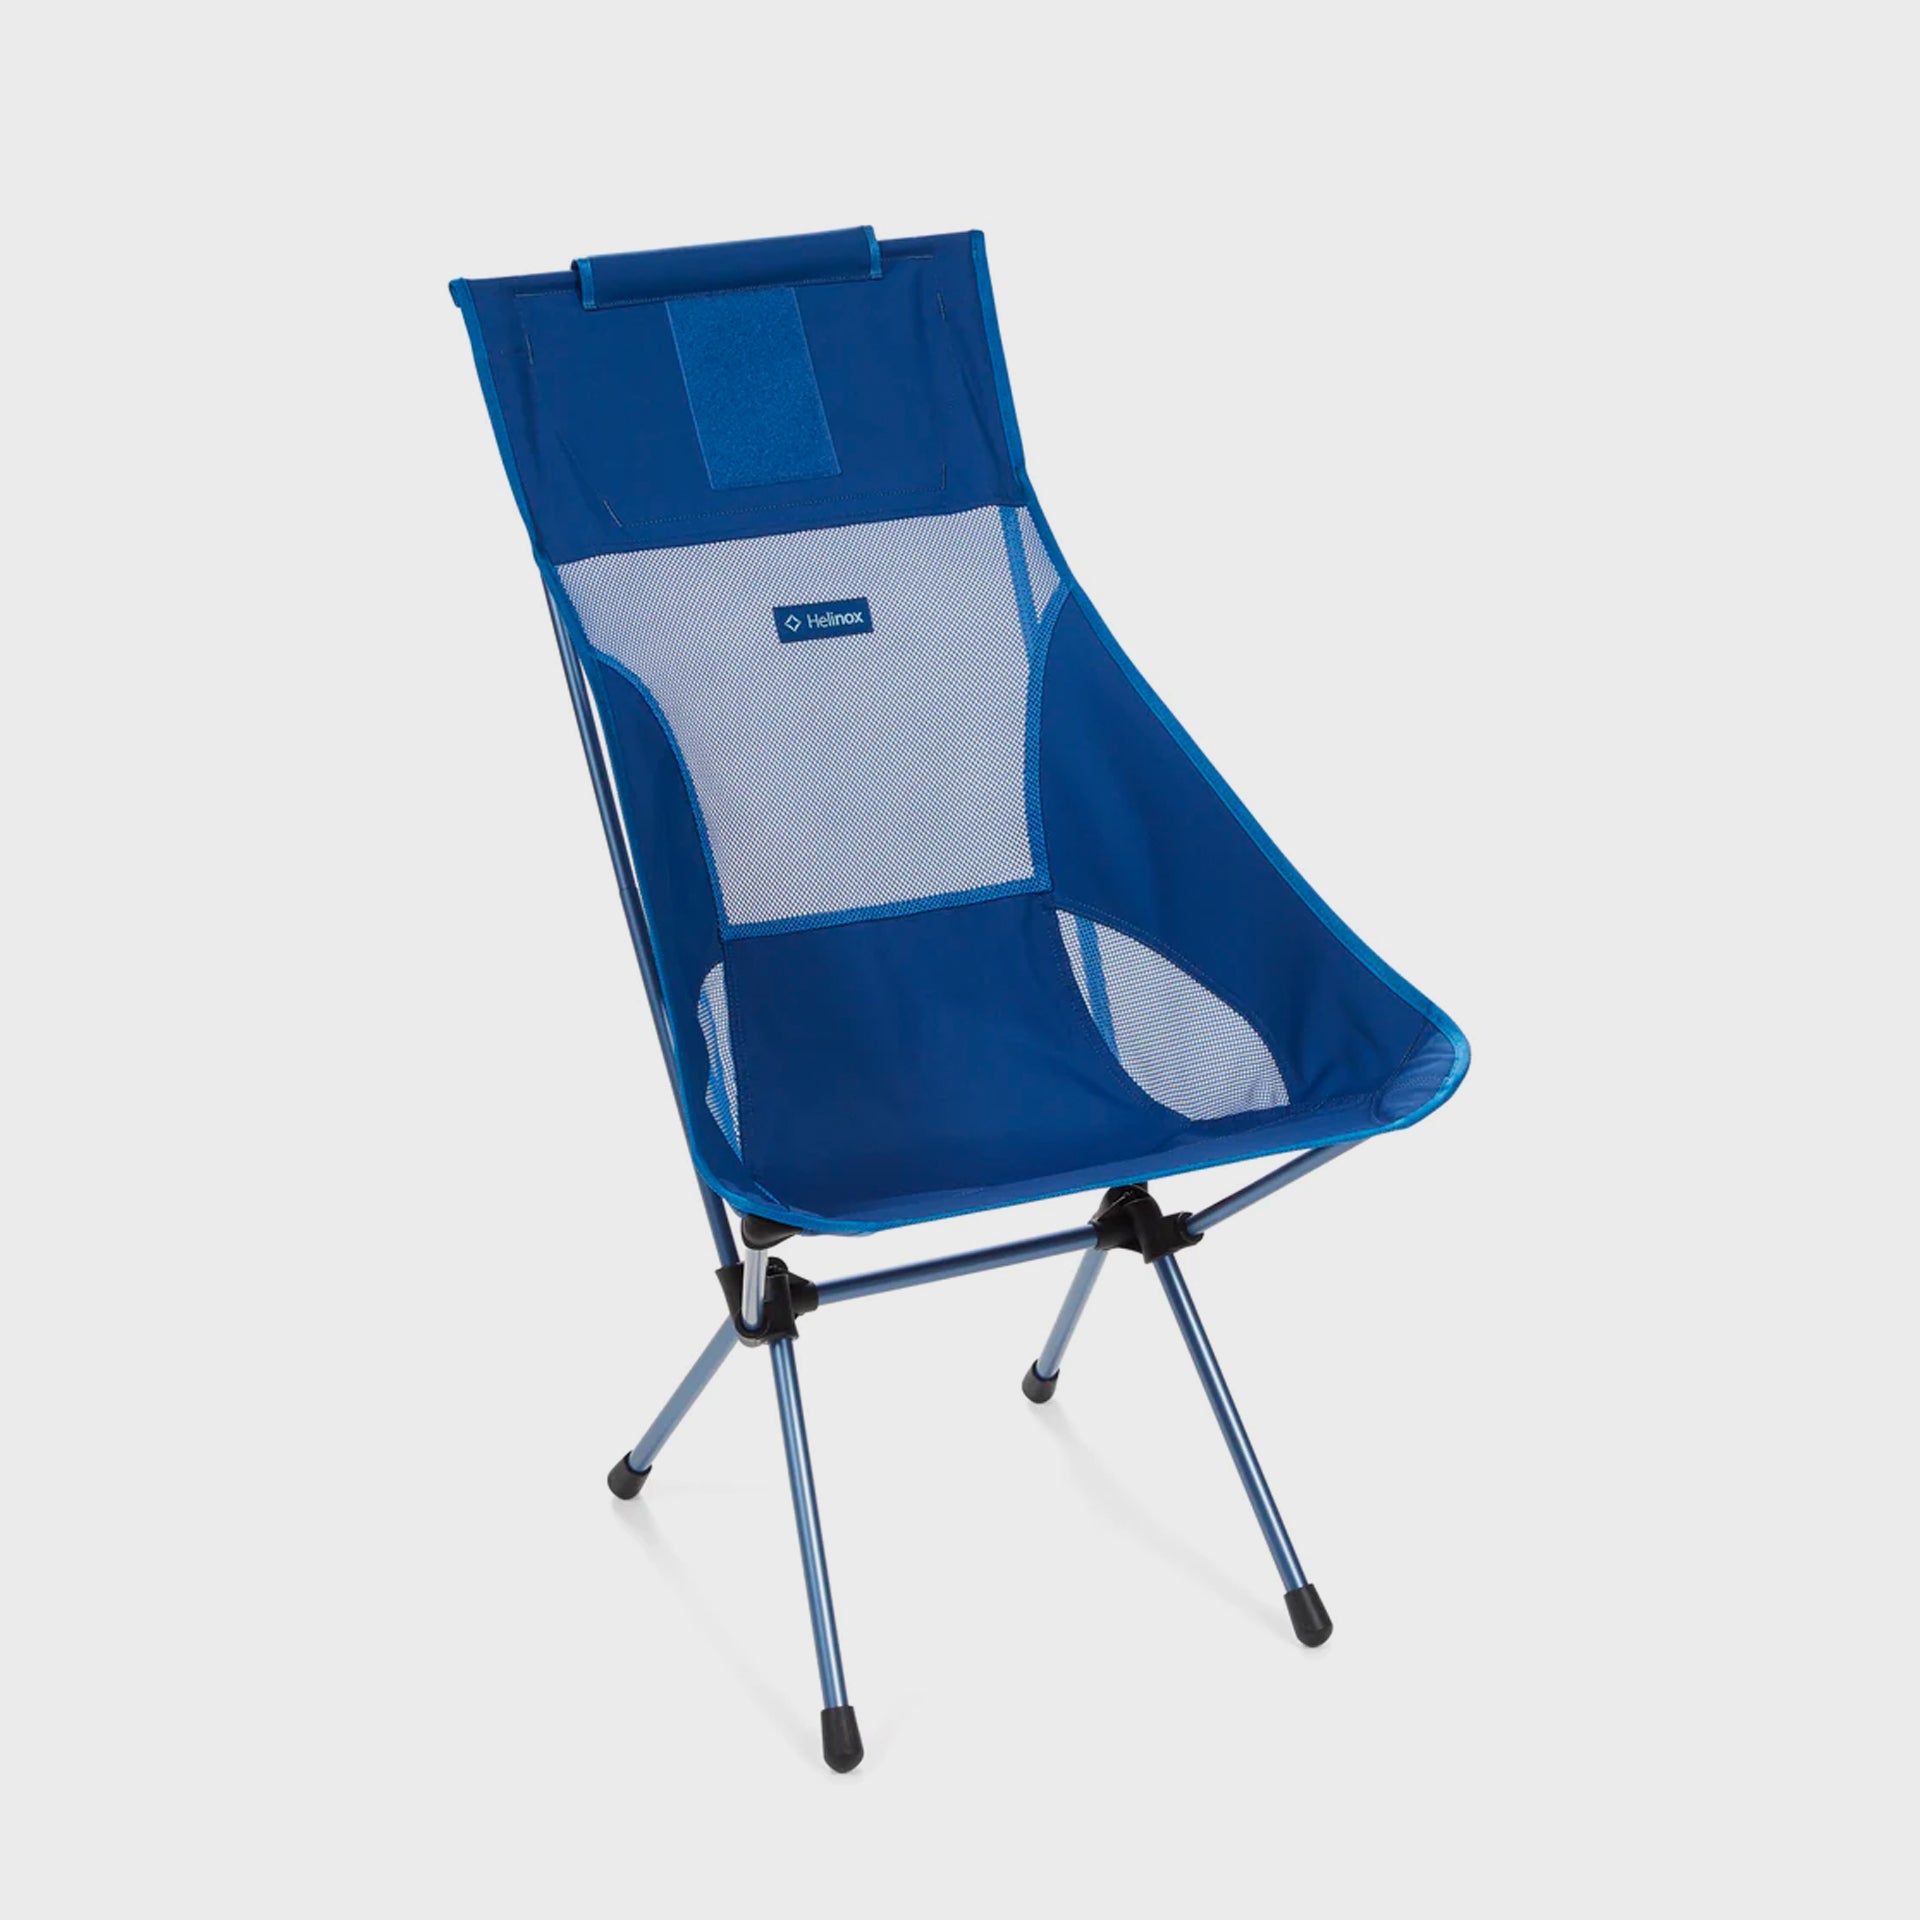 Sunset Chair - Blue Block\Black - ManGo Surfing